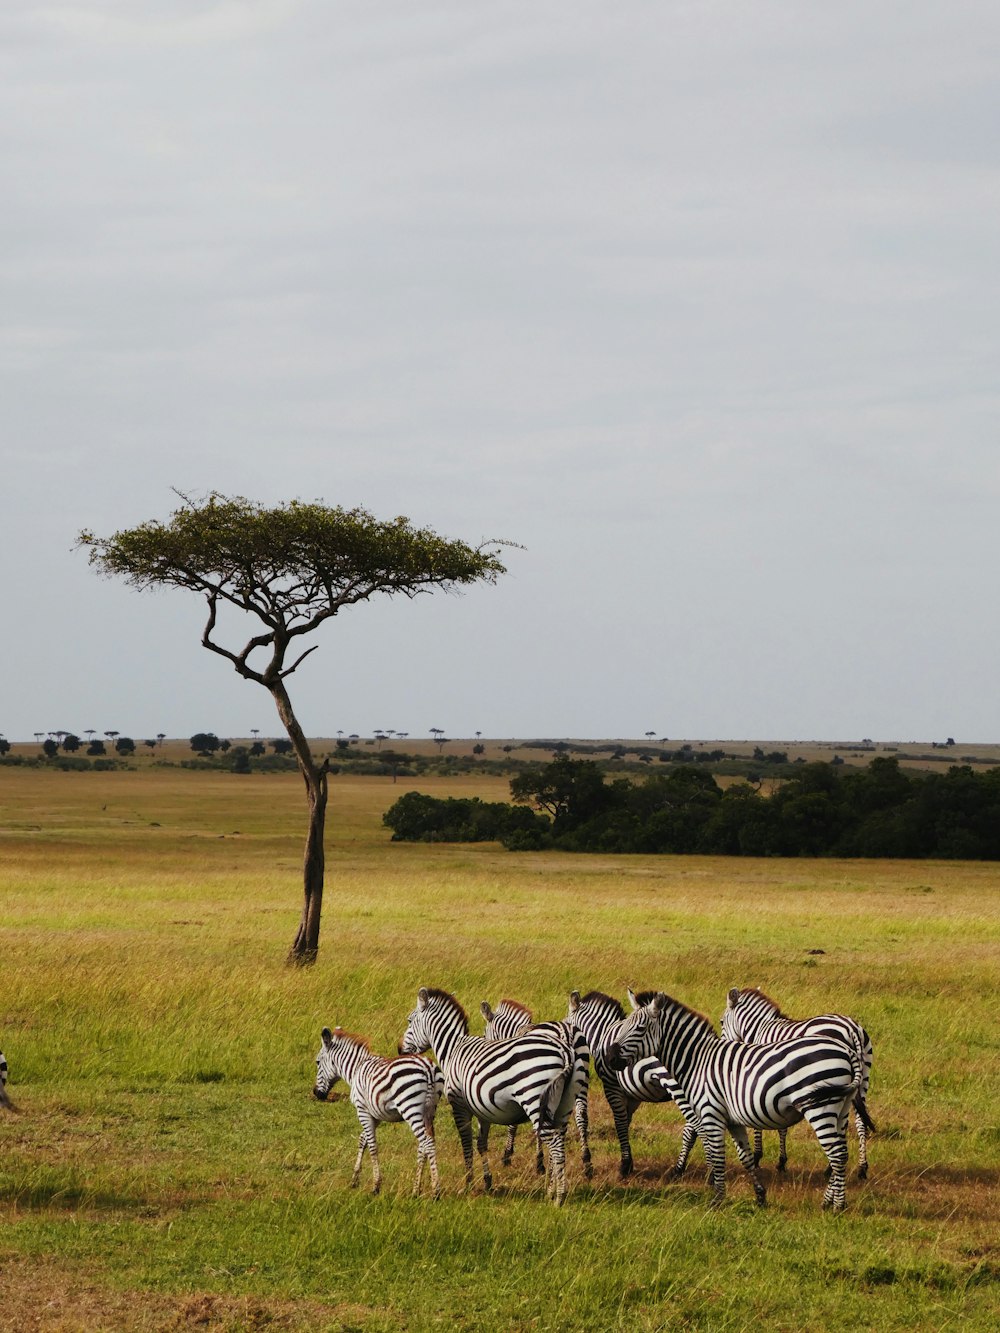 zebras standing on green grass field at daytime